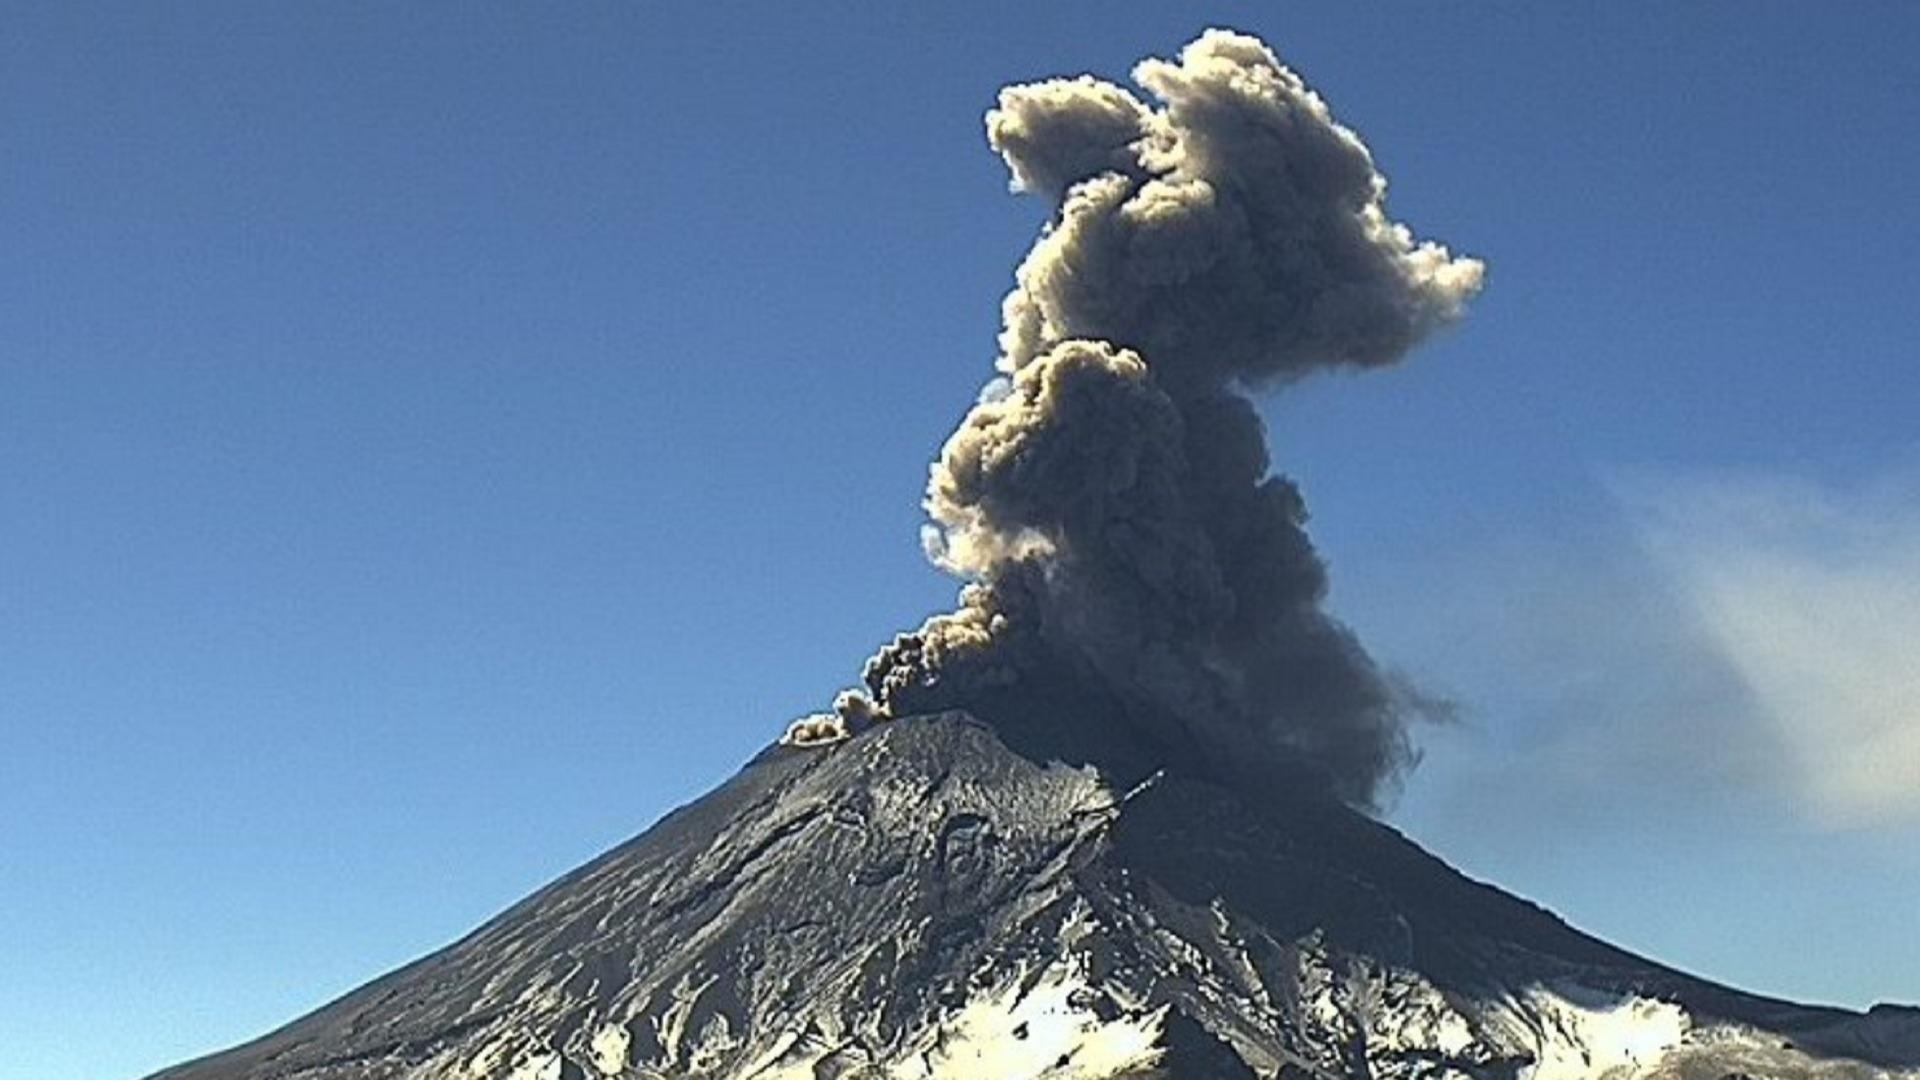 Volcán Popocatépetl Emite Enorme Fumarola de Casi 2 Kilómetros